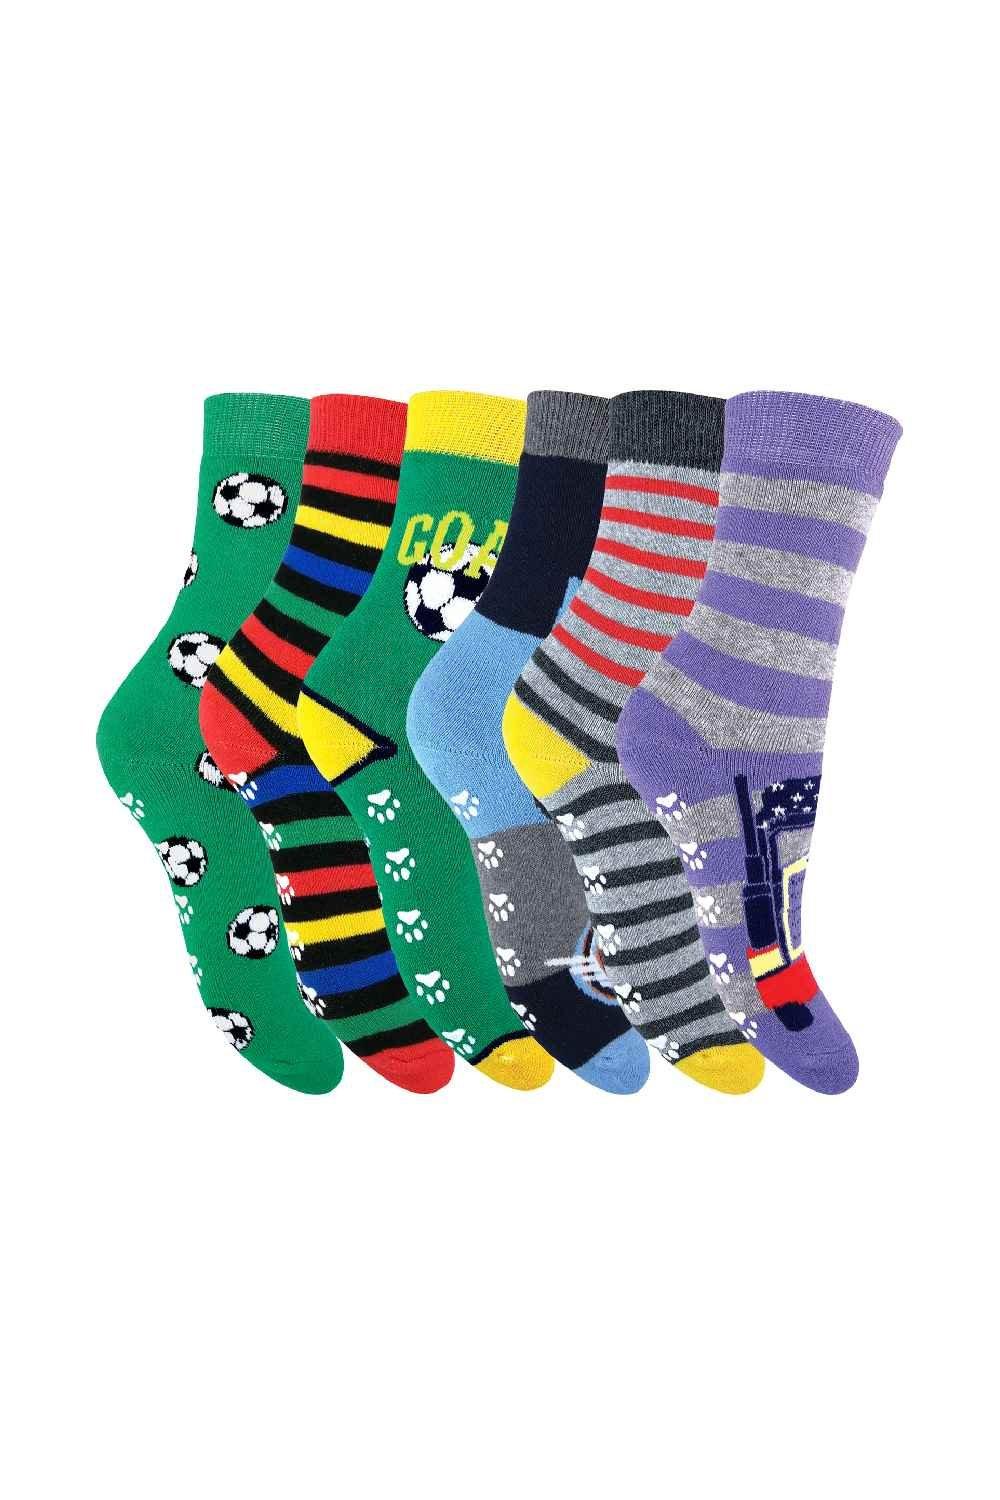 Sock Snob 6 Pack Soft Thick Thermal Slipper Socks with Grippers | Debenhams